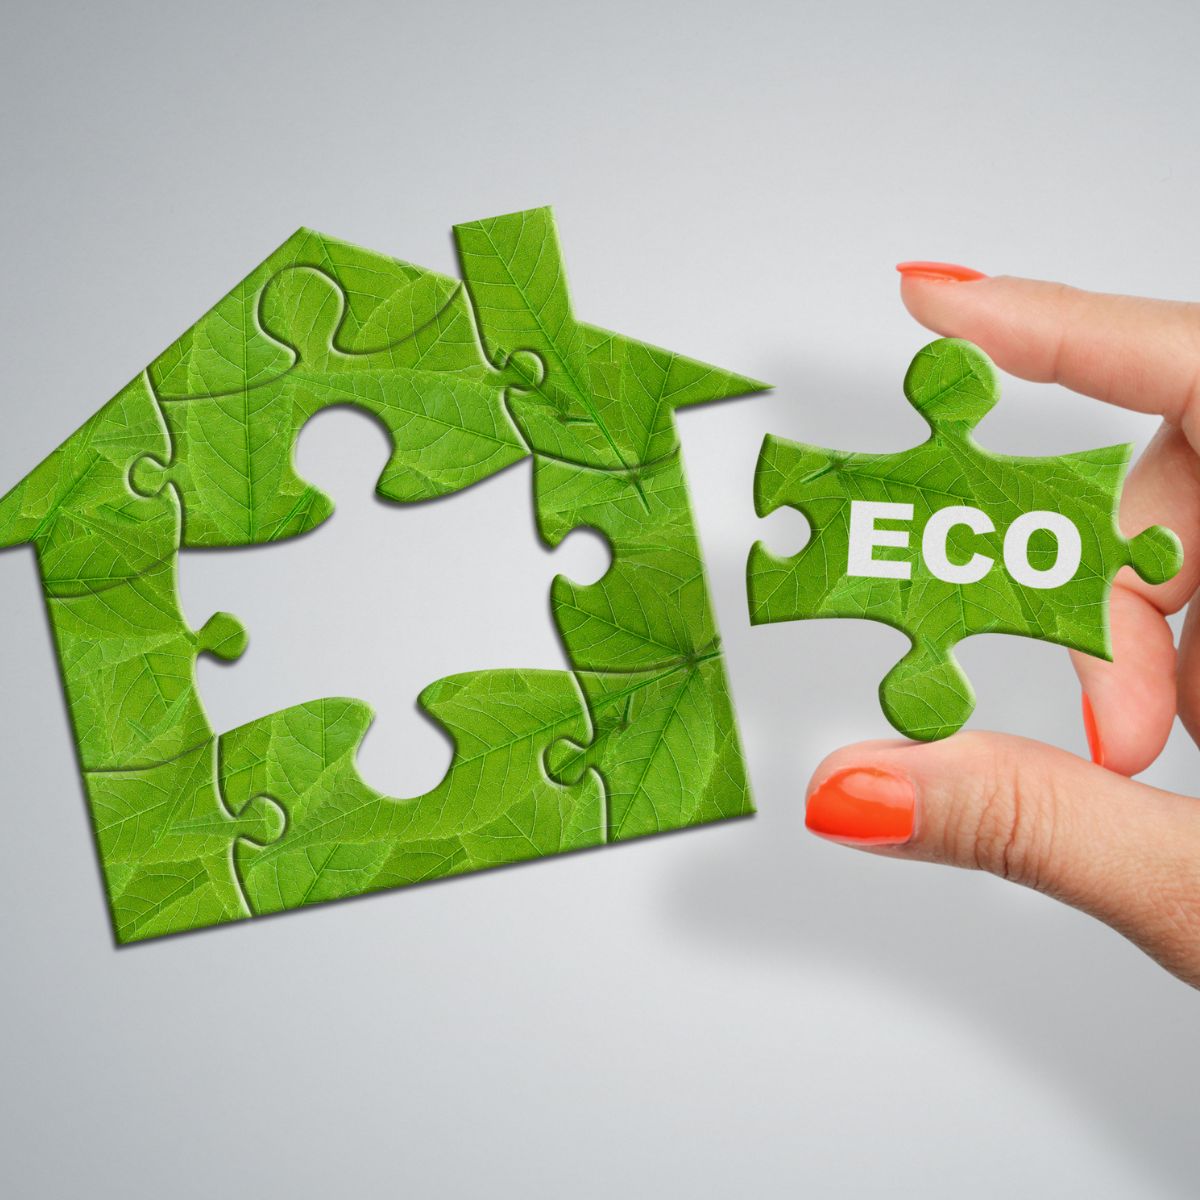 eco-friendly-options